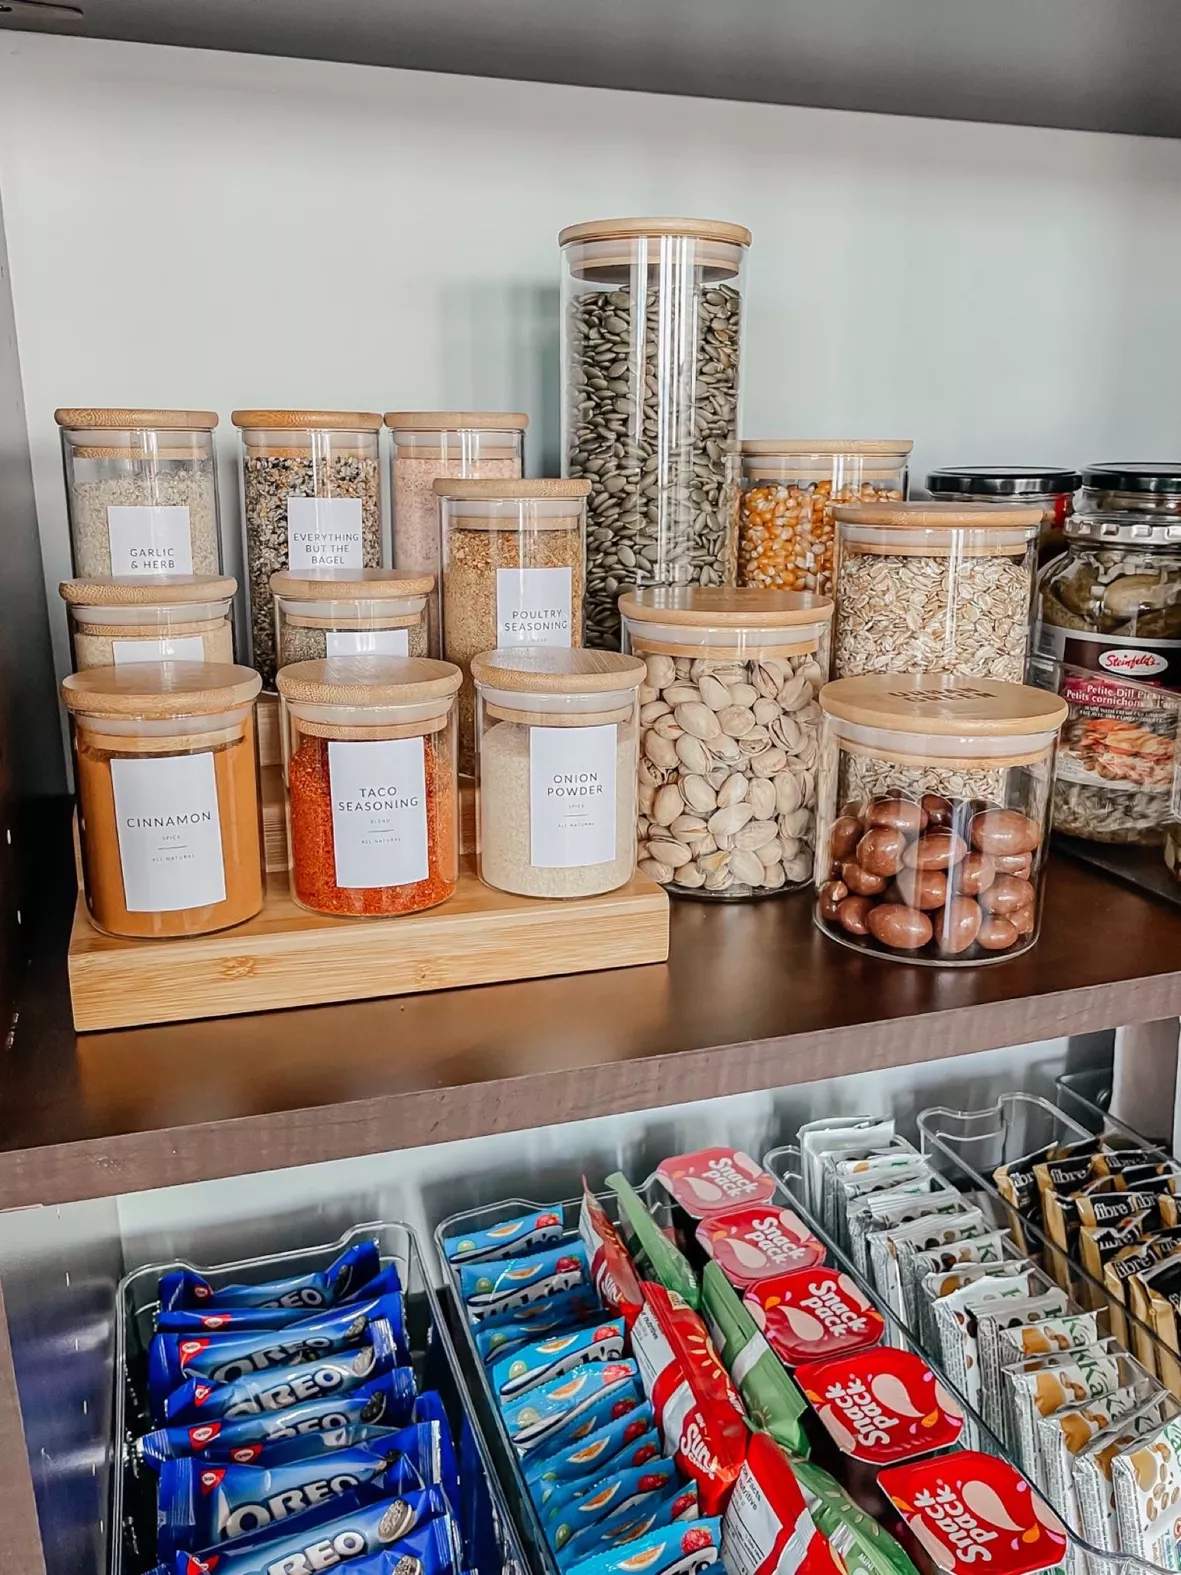 mDesign Bamboo Spice and Food Kitchen Shelf Storage Organizer